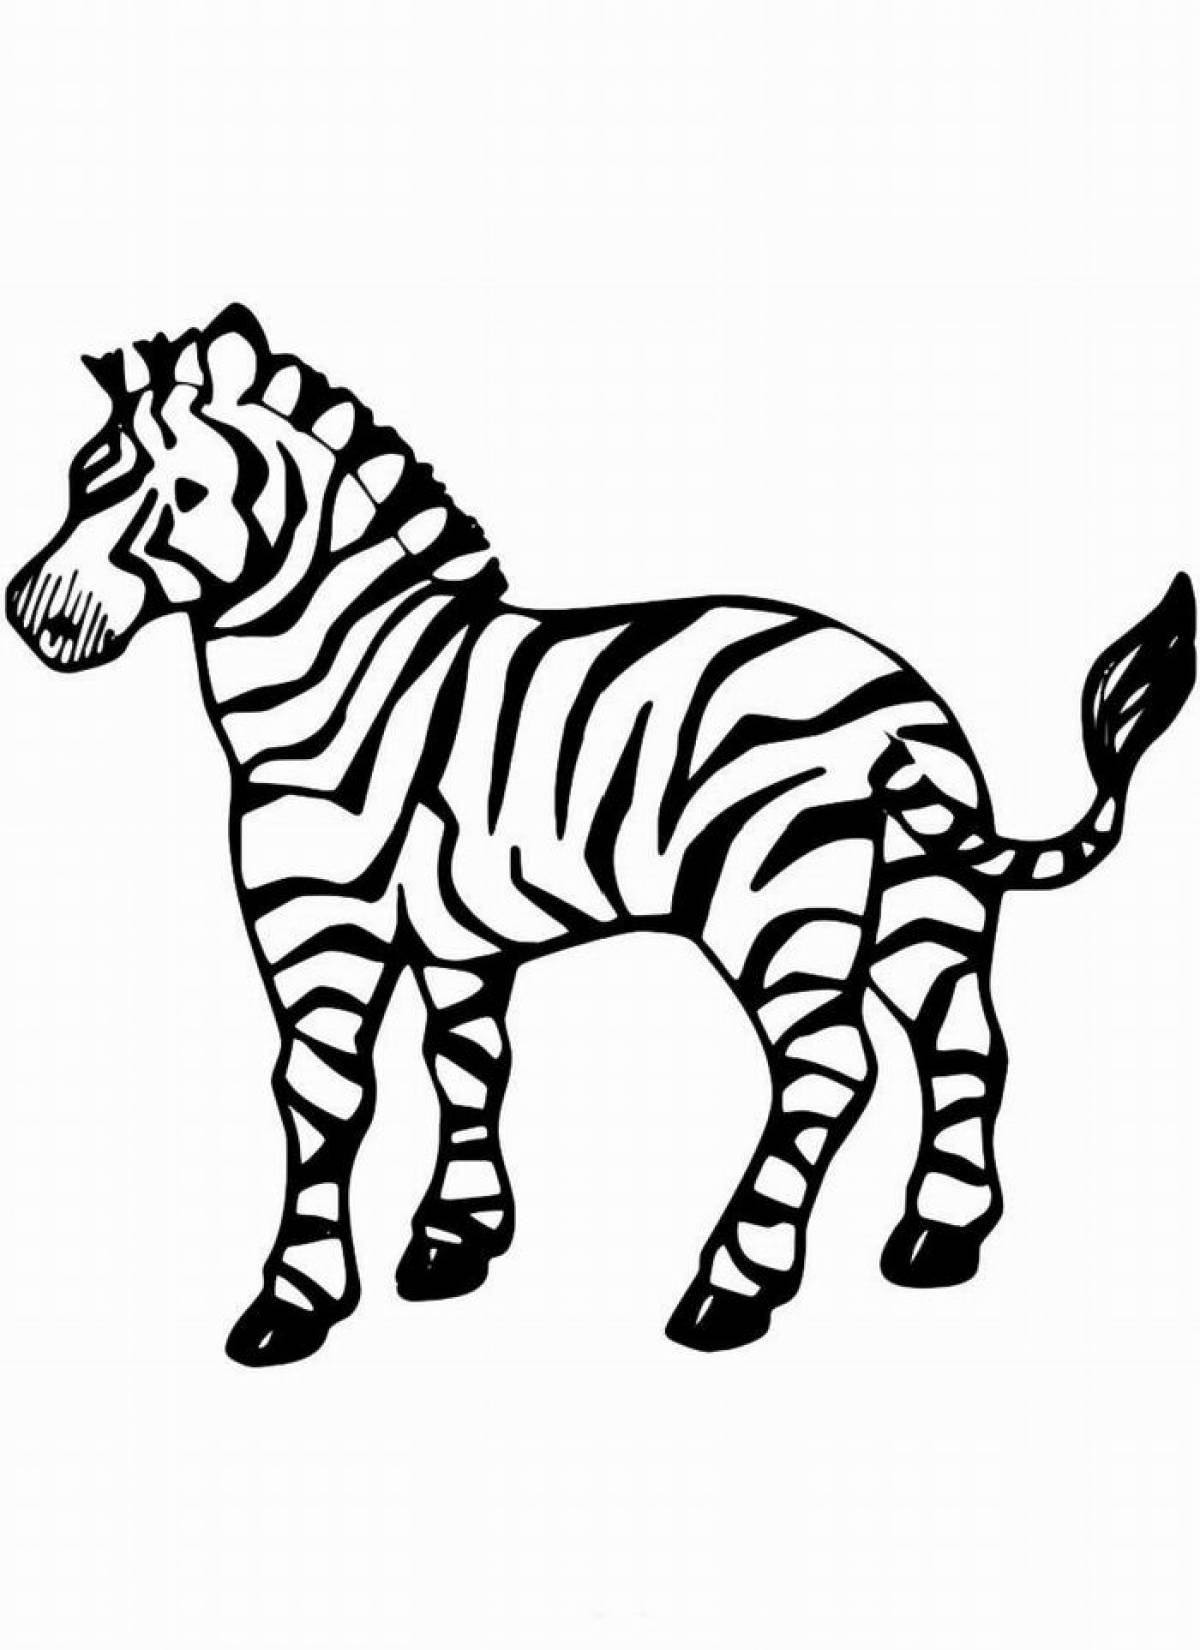 Animal striped